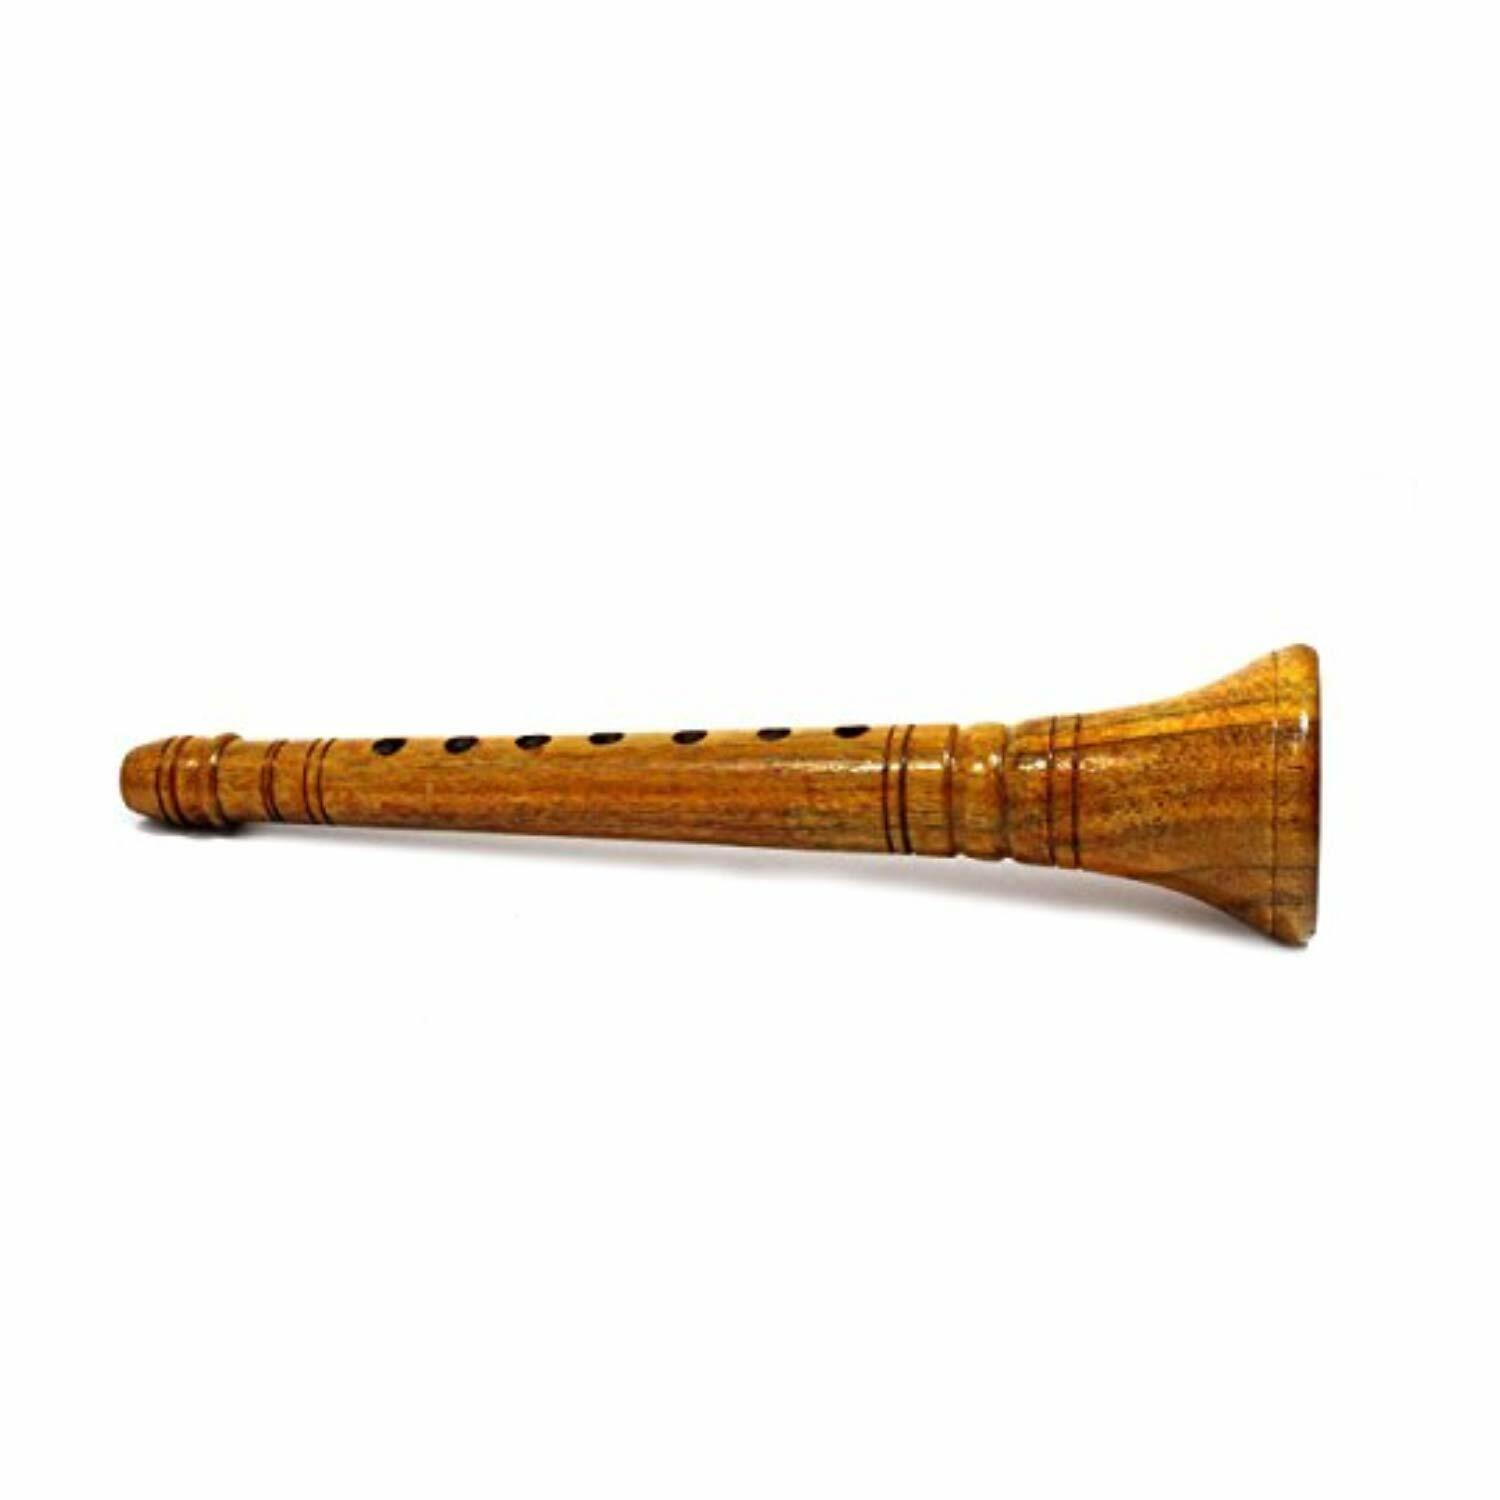 Handmade Miniature Musical Instruments Wooden Shehnai for Kids (Brown, H-0 x L-2